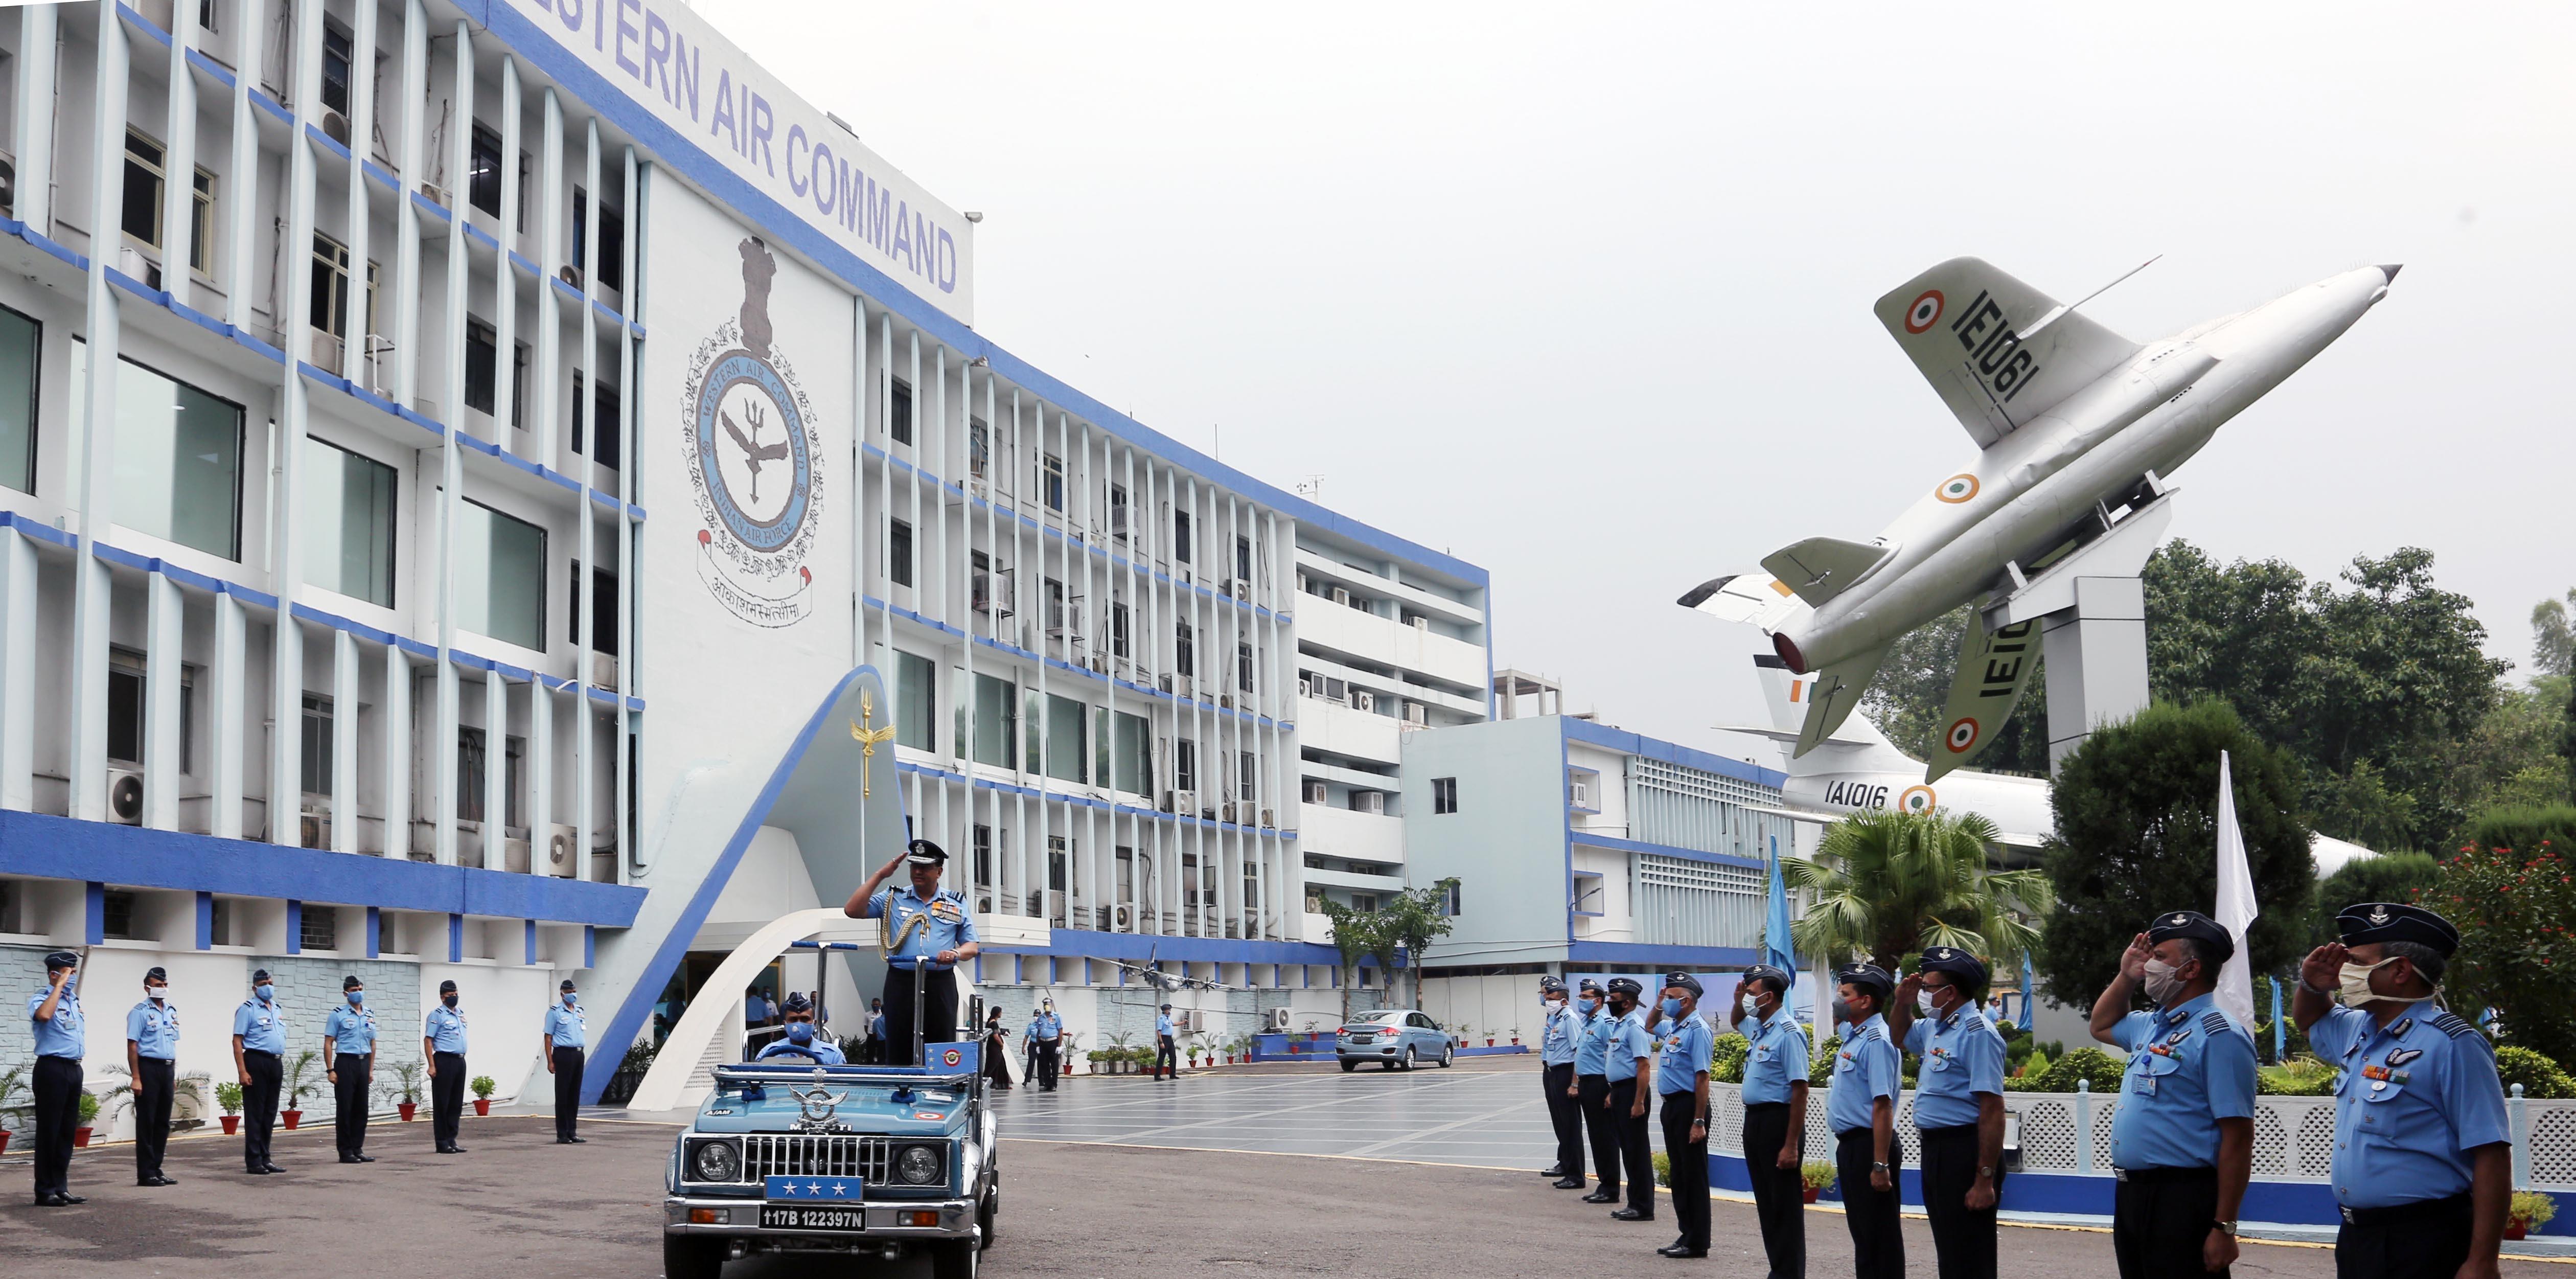 Western Air Command AOC-in-Chief B Suresh superannuated